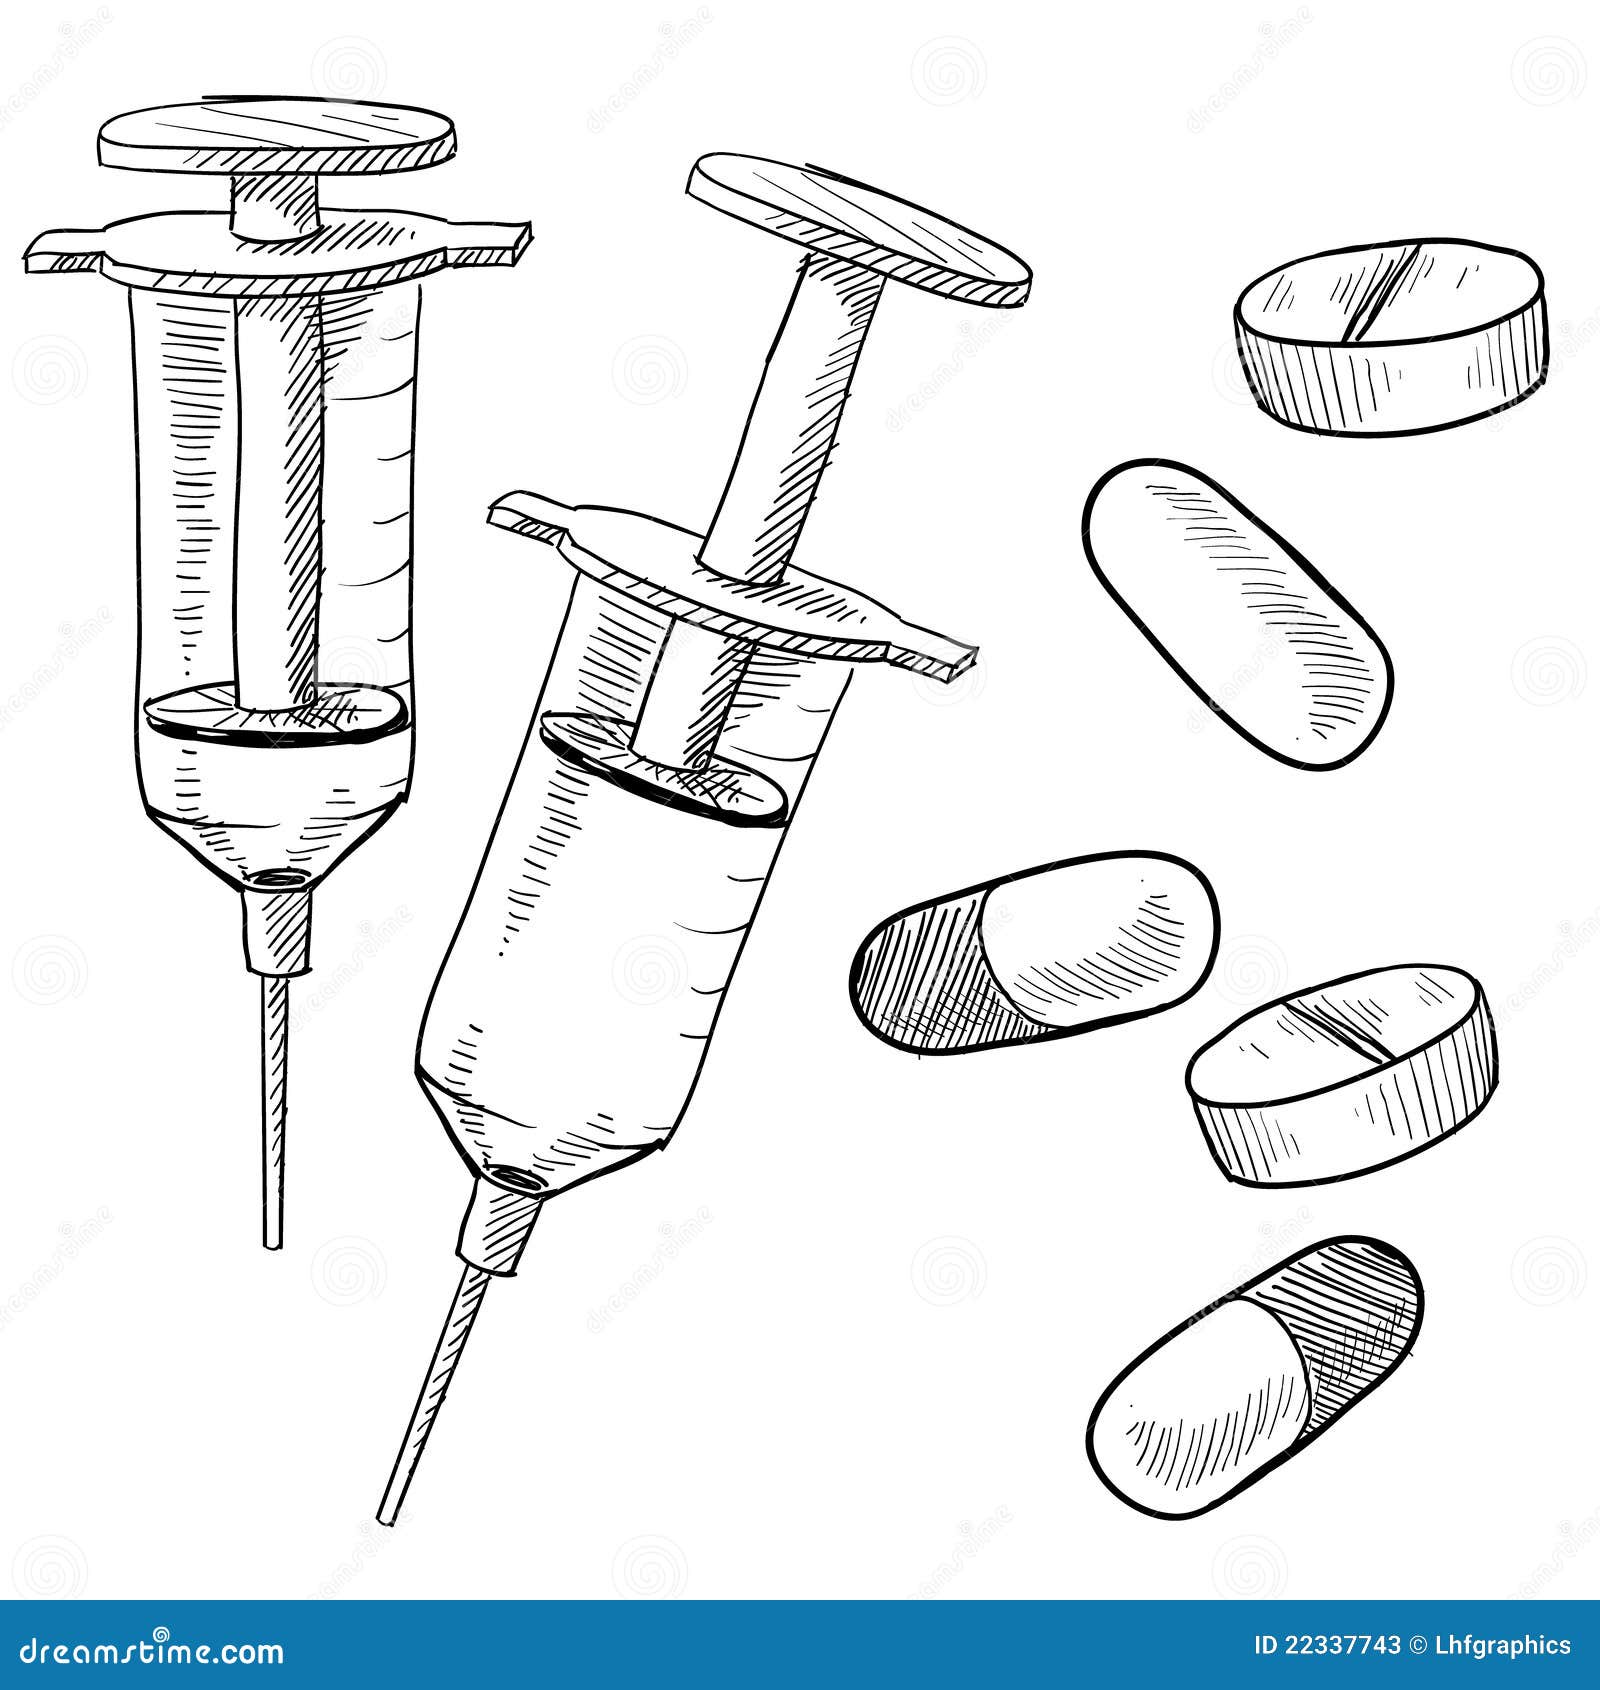 Medicine Or Drug Sketches Stock Photos - Image: 22337743